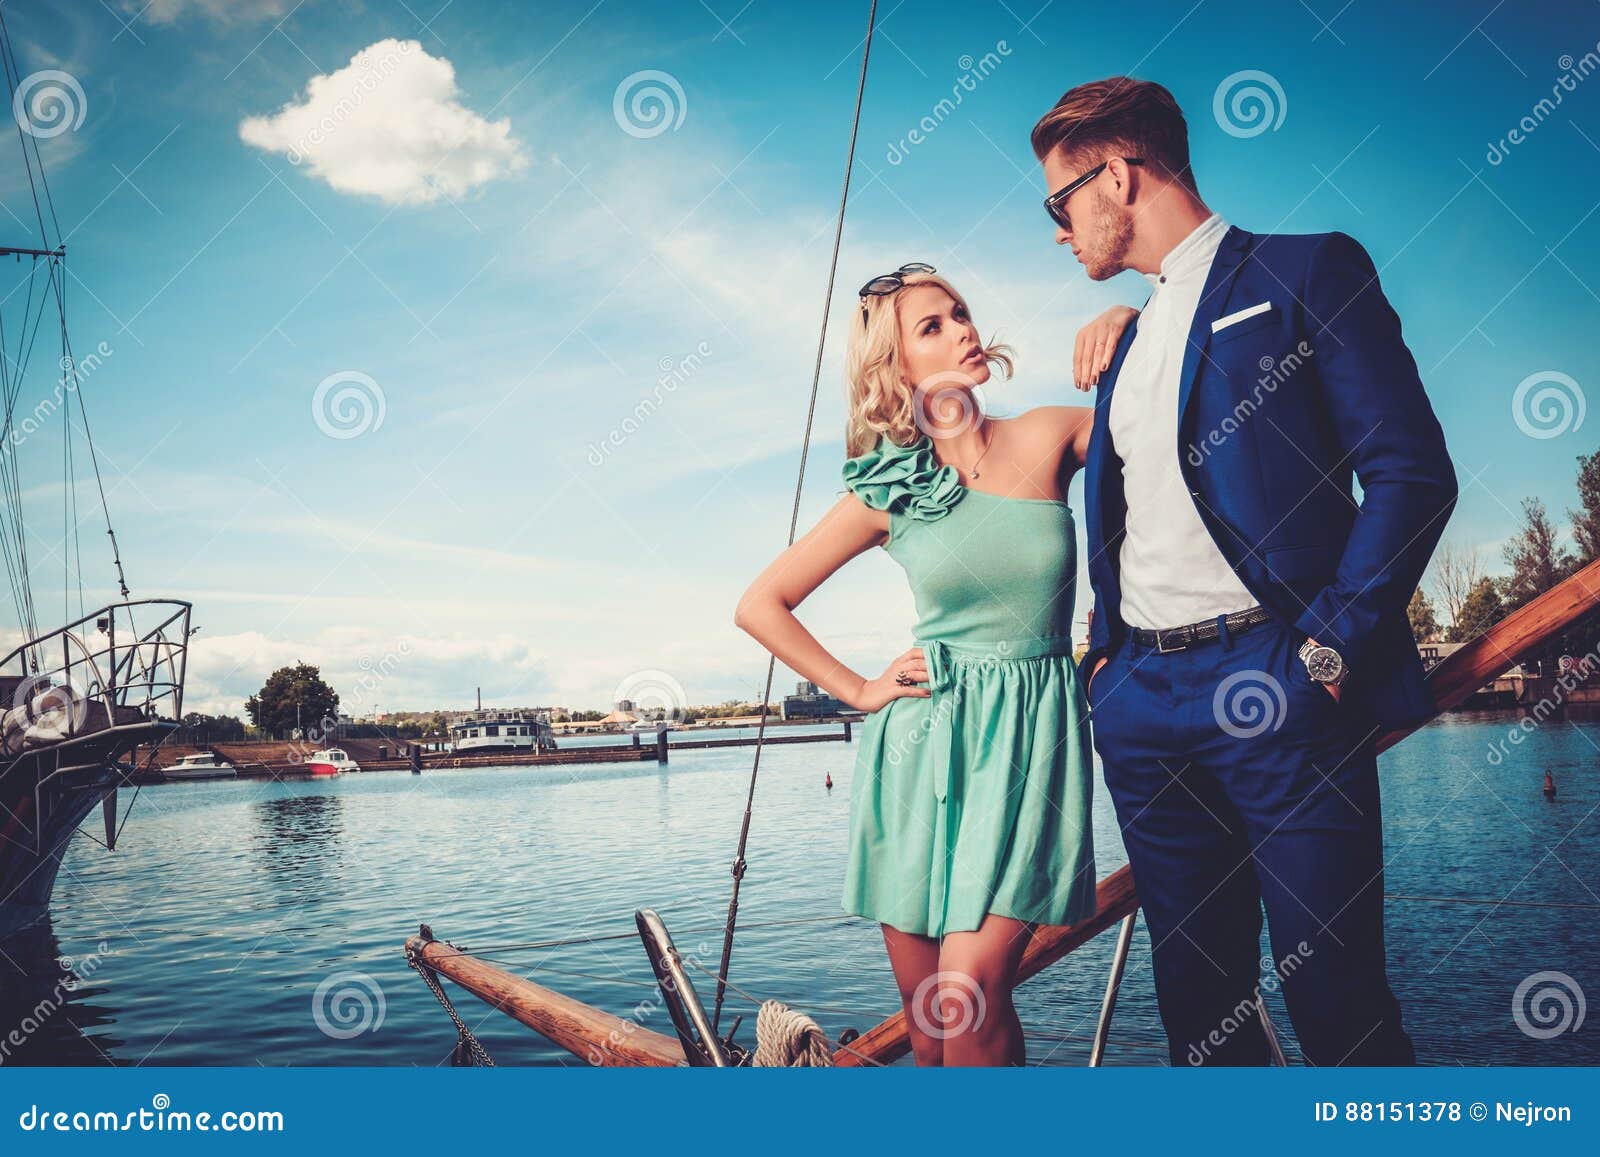 stylish wealthy couple on a luxury yacht